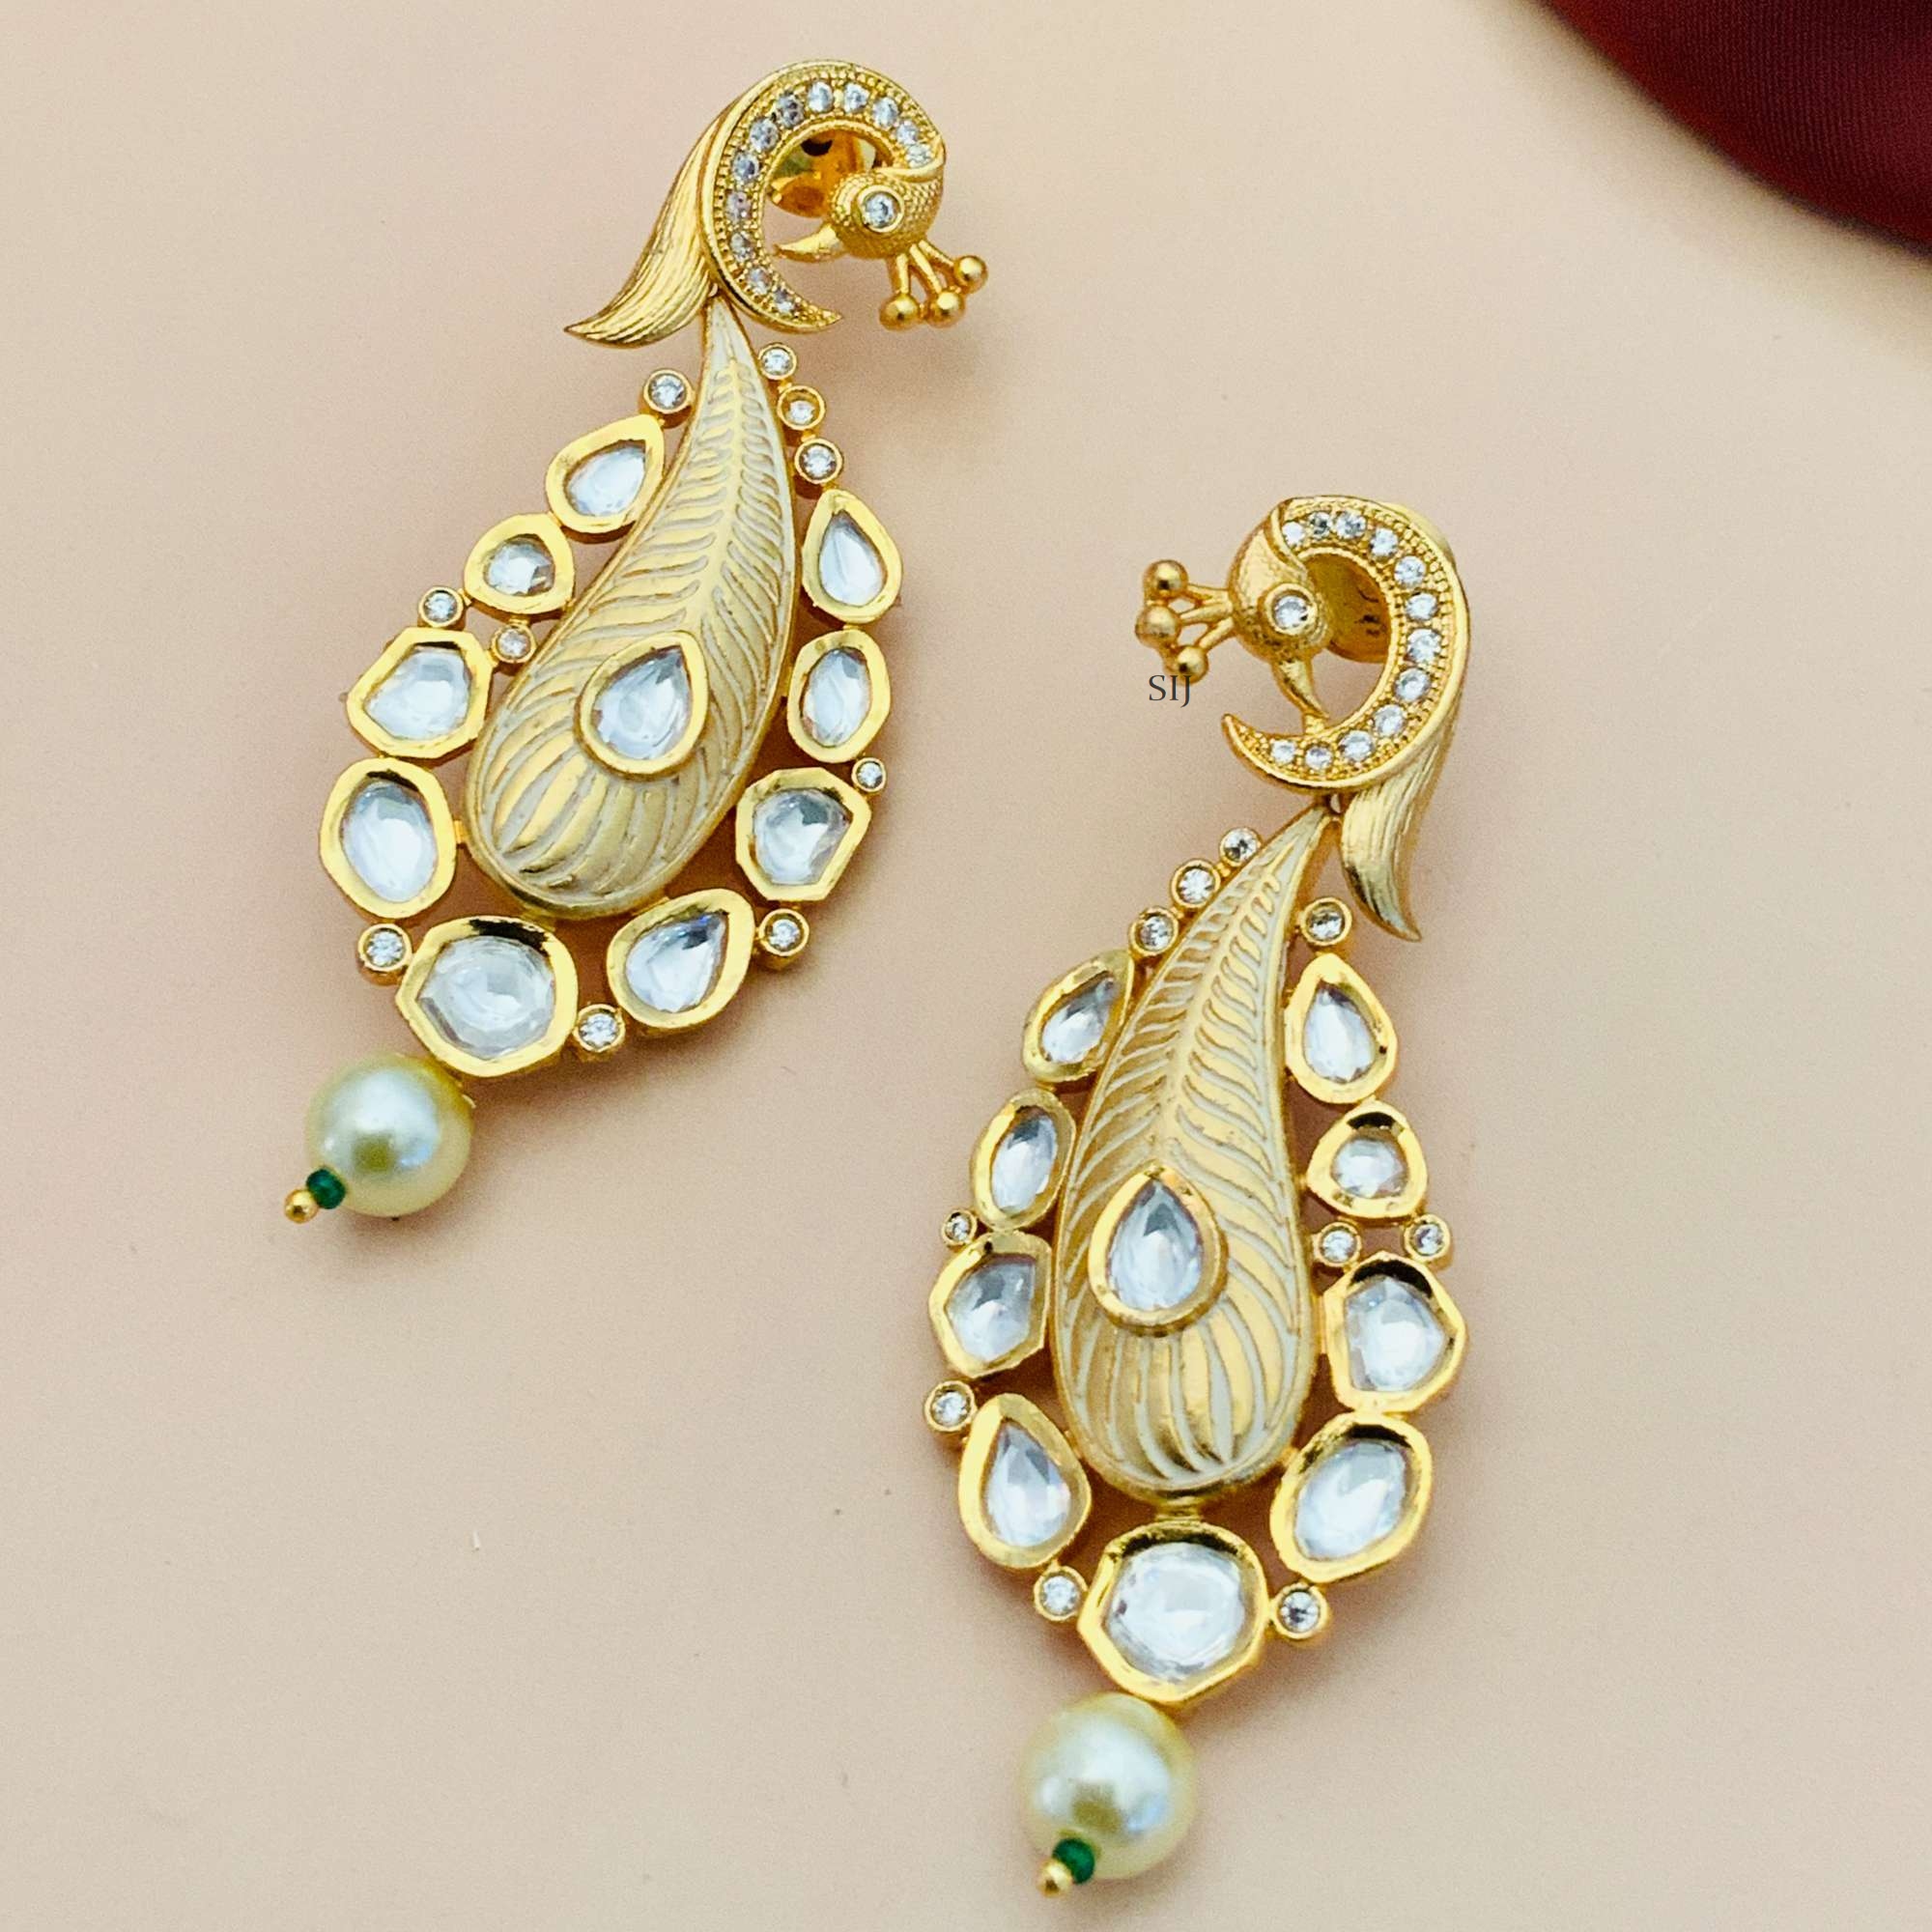 Imitation Kundan Peacock Design Earrings with White Stone